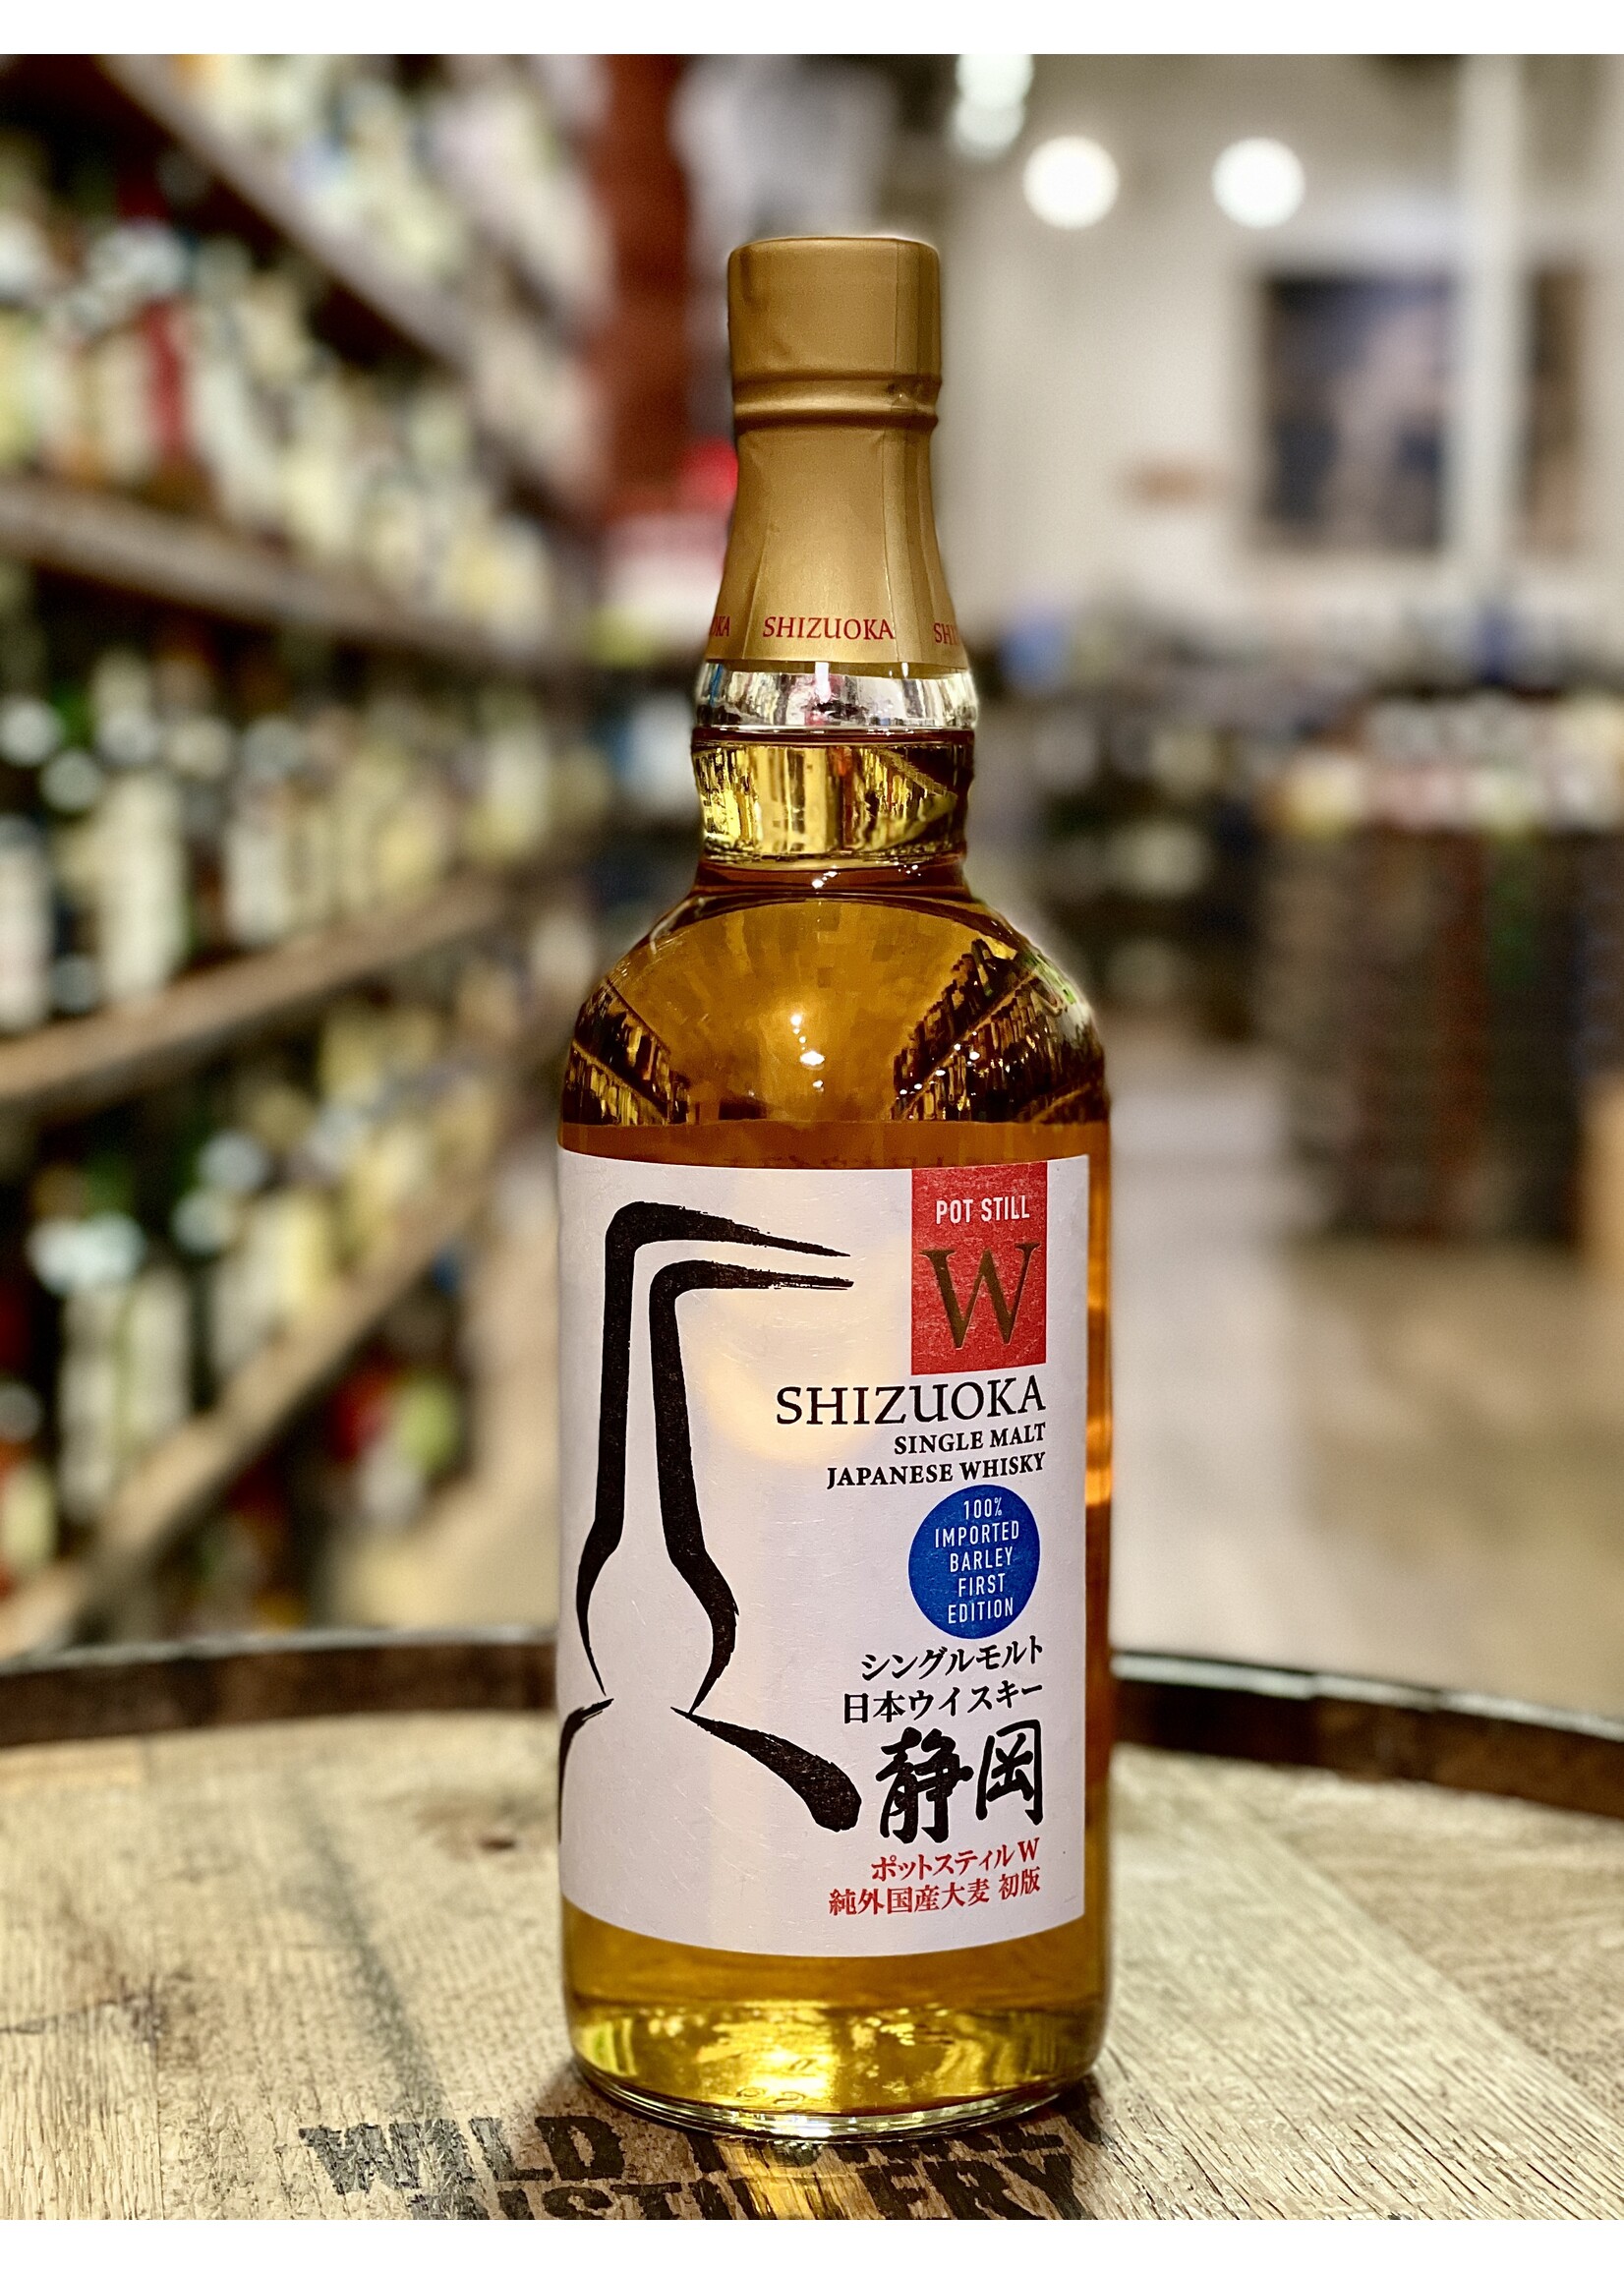 Shizuoka Shizuoka / W Pot Still 100% Imported Barley Single Malt Japanese Whisky 55.5% abv / 700mL